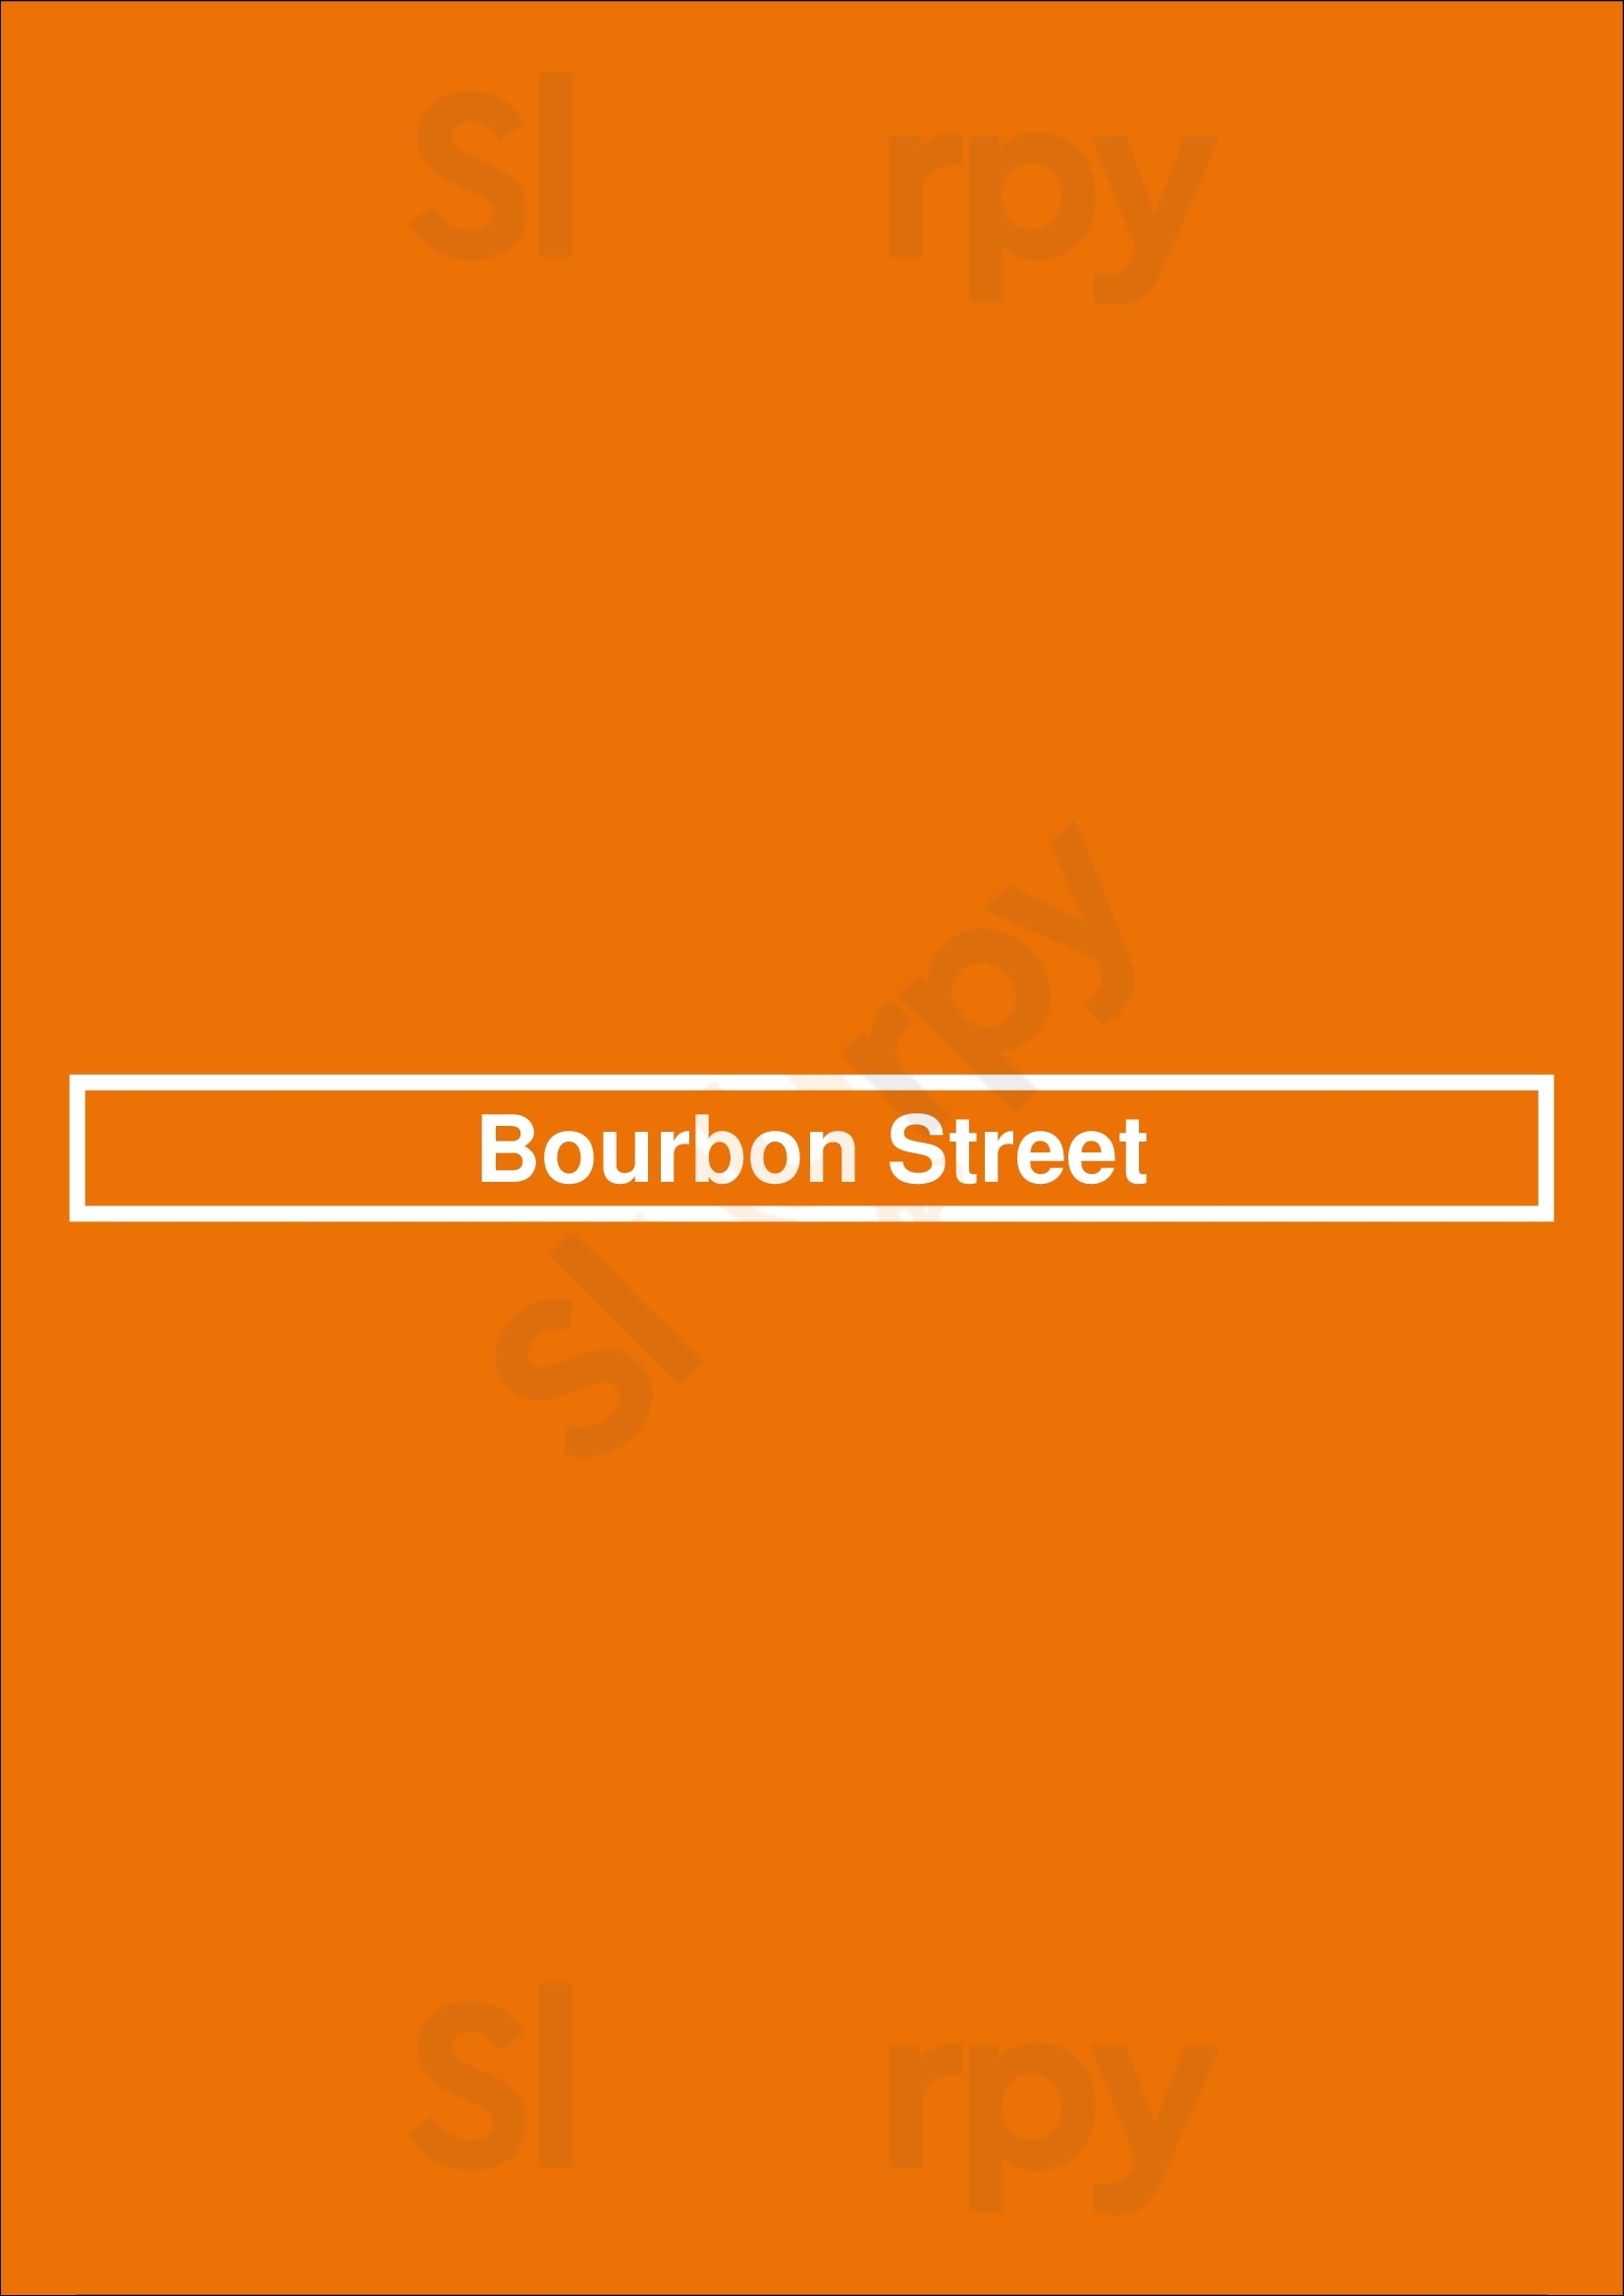 Bourbon Street Brisbane Menu - 1